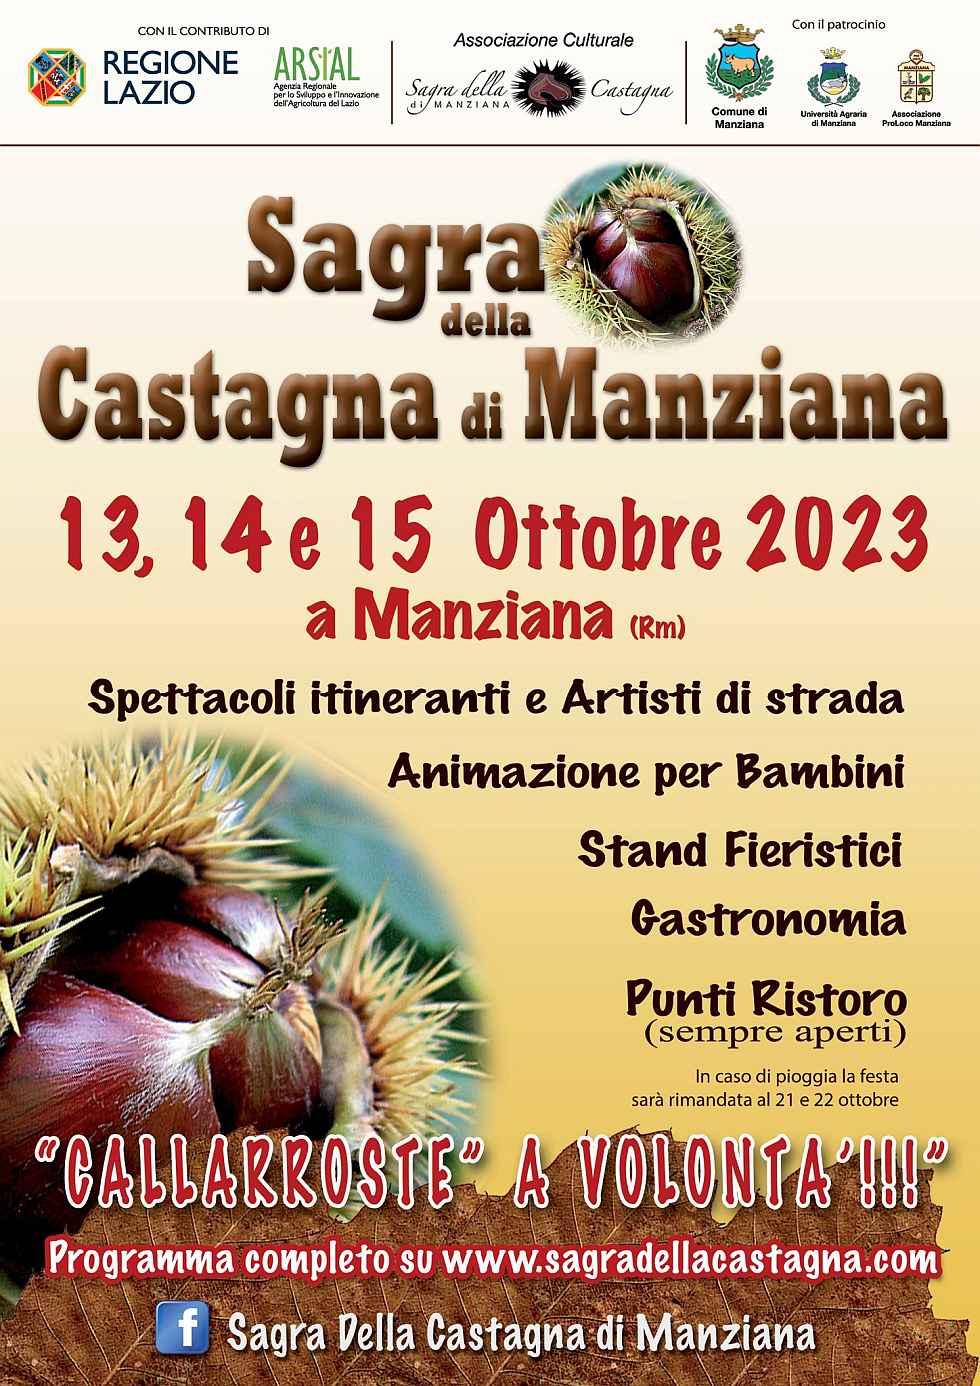 Manziana (RM)
"Sagra della Castagna"
14-15 Ottobre 2022 
